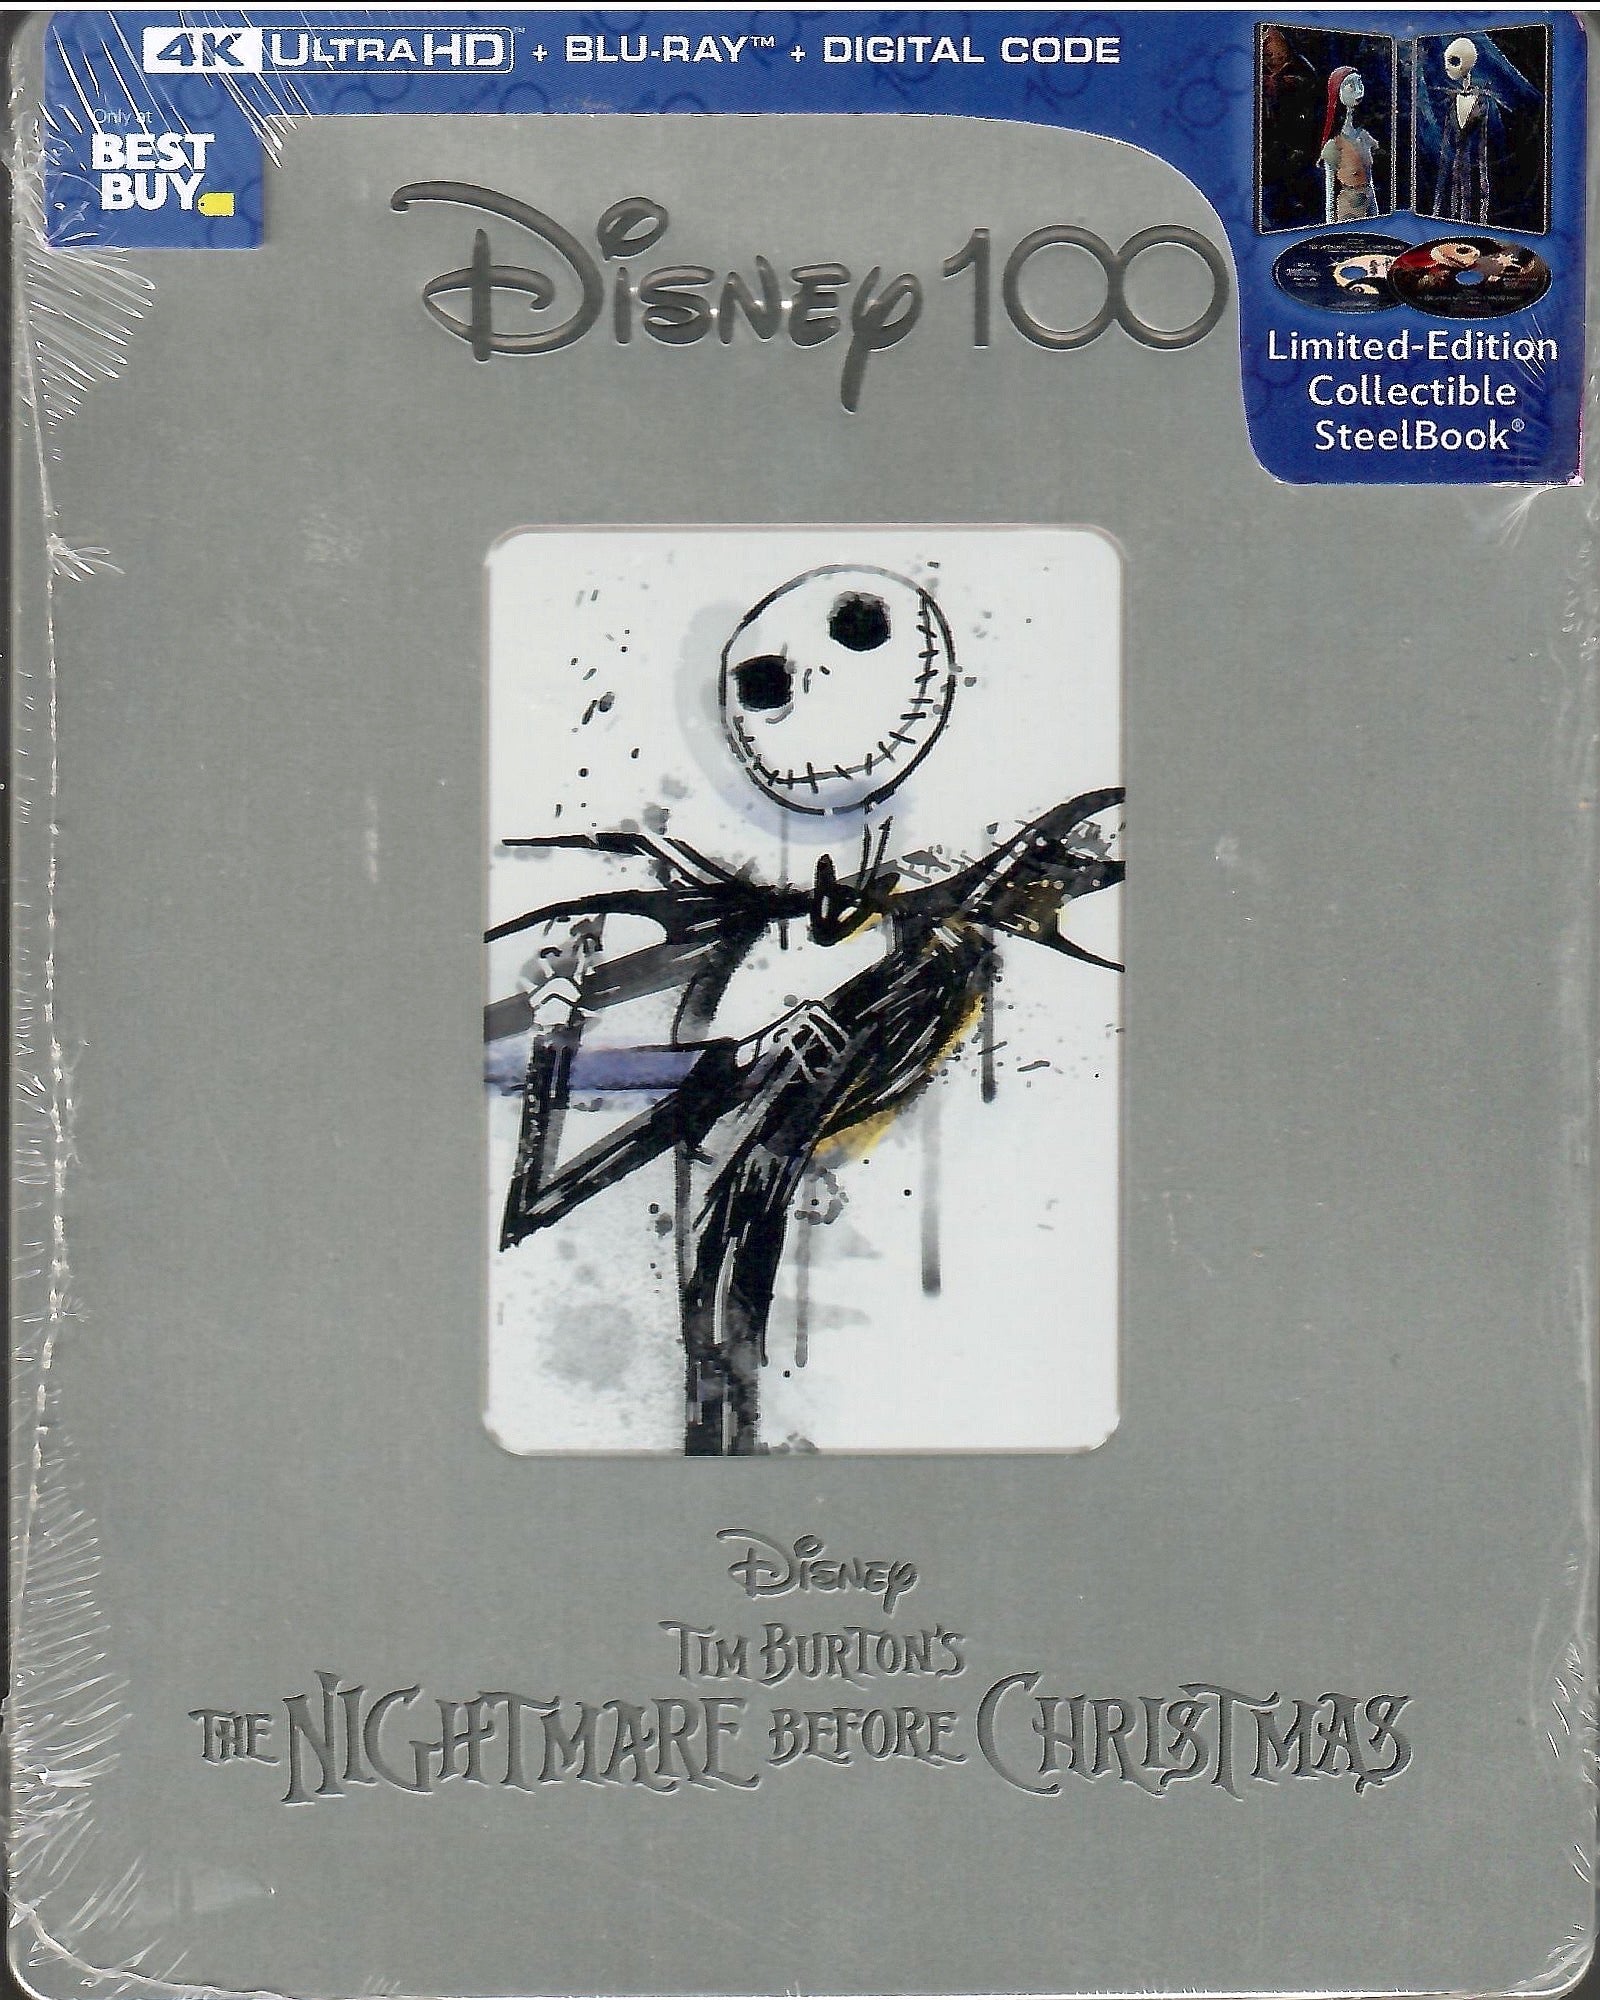 The Nightmare Before Christmas [Includes Digital Copy] [Blu-ray] [1993] -  Best Buy